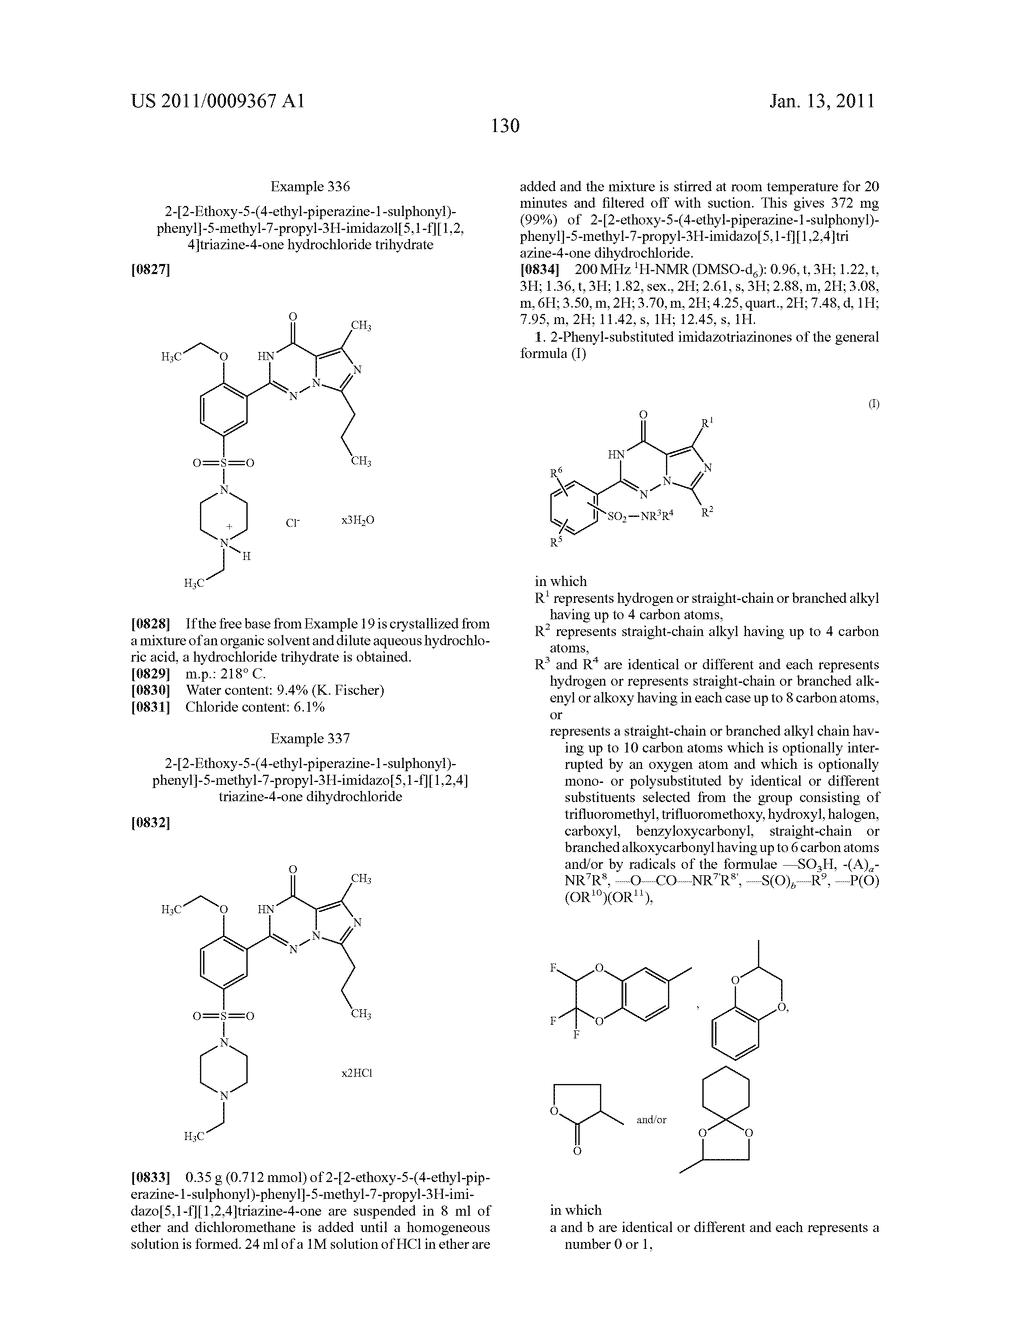 2-PHENYL SUBSTITUTED IMIDAZOTRIAZINONES AS PHOSPHODIESTERASE INHIBITORS - diagram, schematic, and image 131